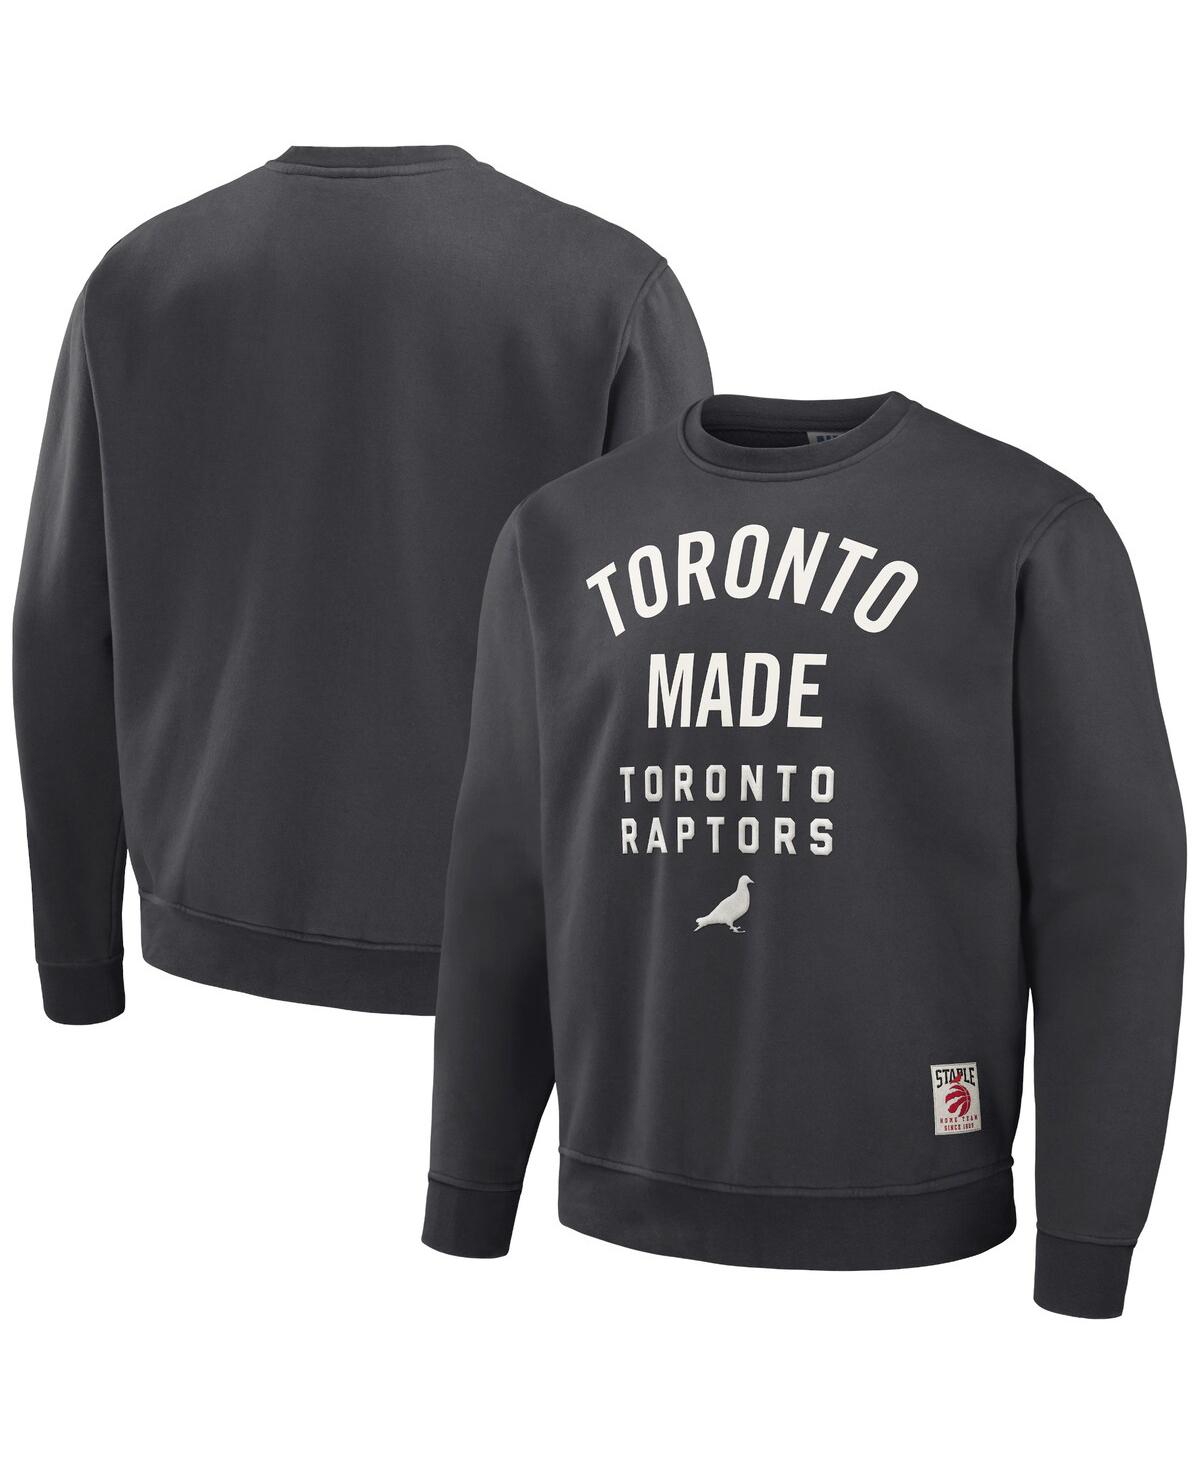 Men's Nba x Staple Anthracite Toronto Raptors Plush Pullover Sweatshirt - Anthracite